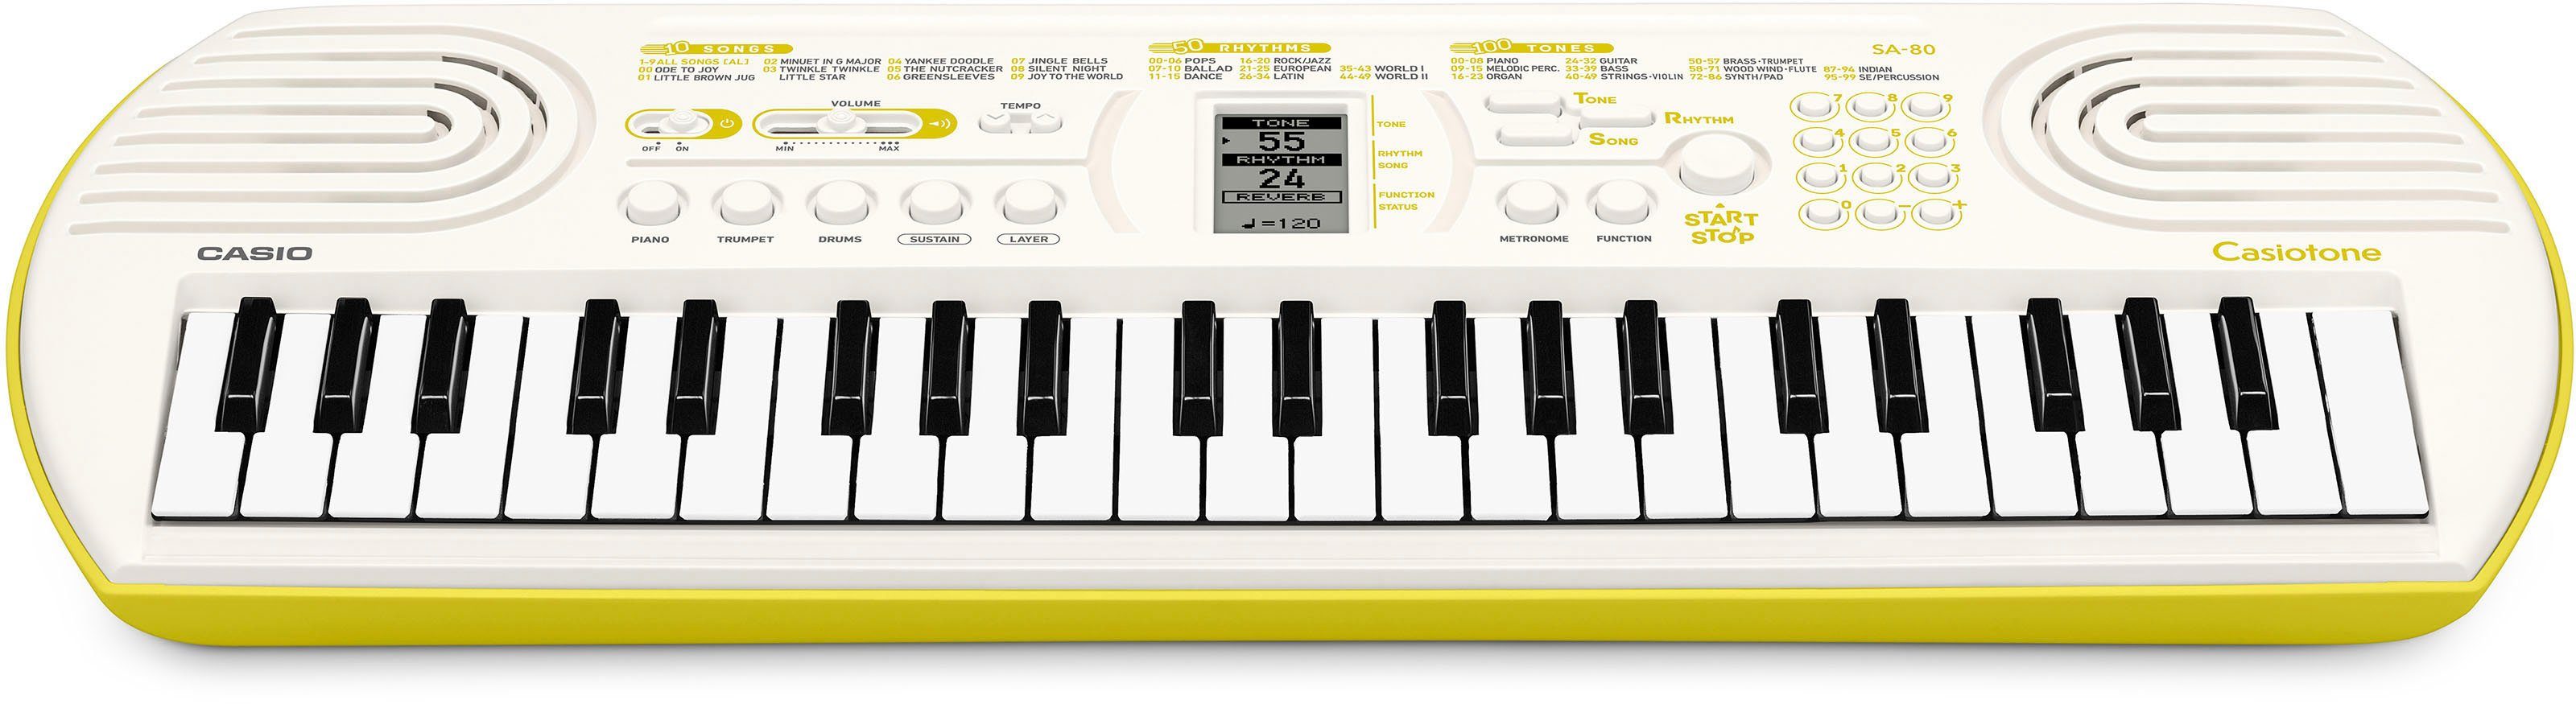 mit CASIO Home-Keyboard Tasten SA-80, Mini-Keyboard 44